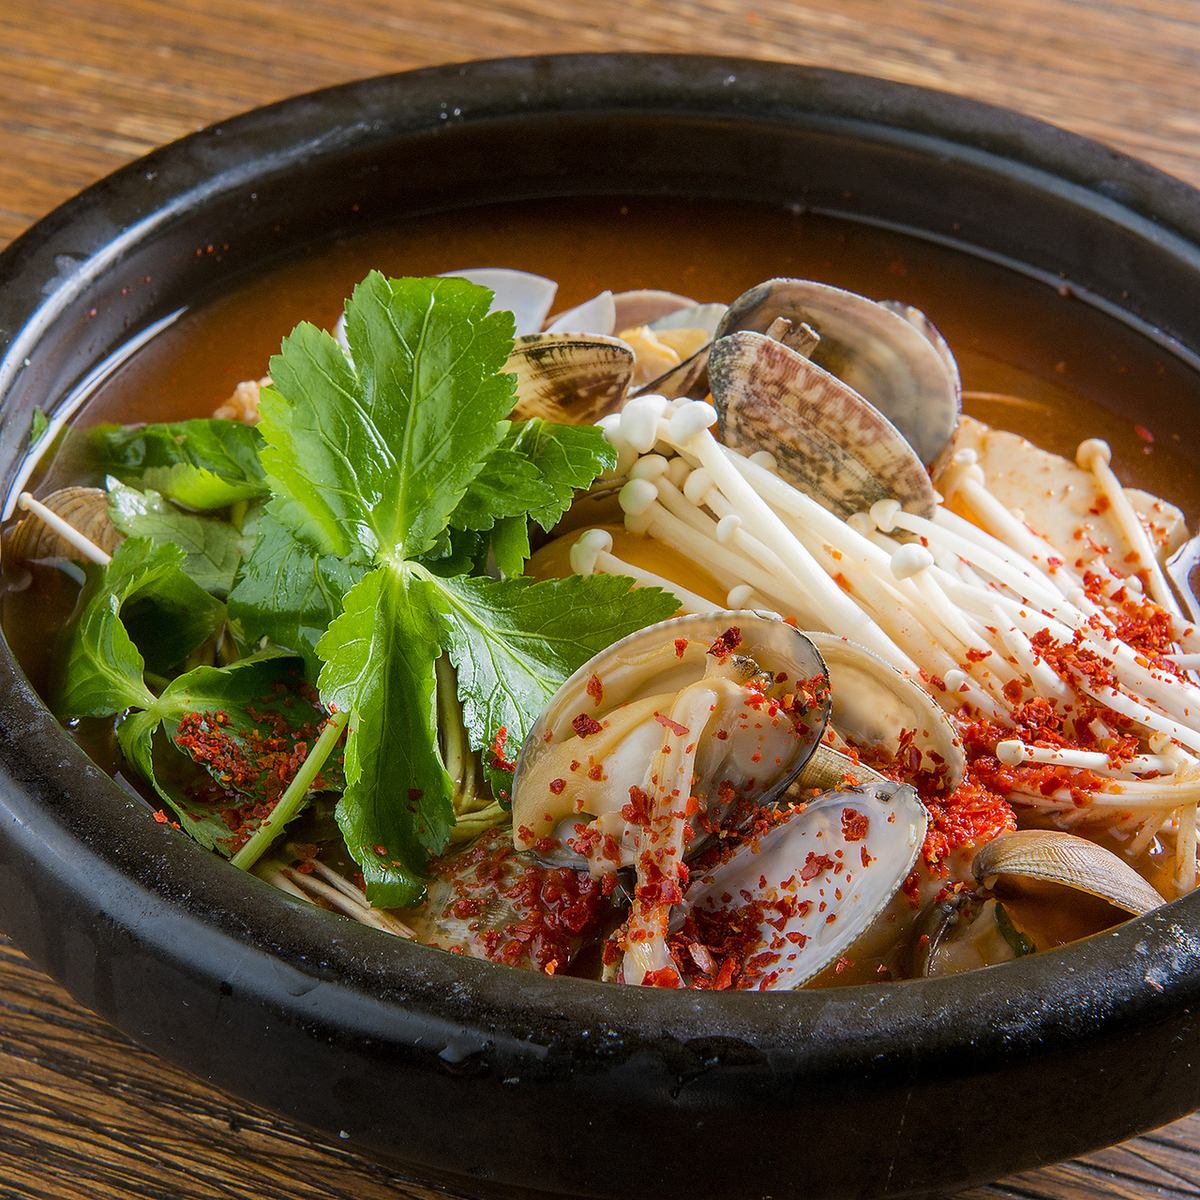 Easily enjoy popular Korean food such as Jjigae, Samgyetang, and Dak-galbi!